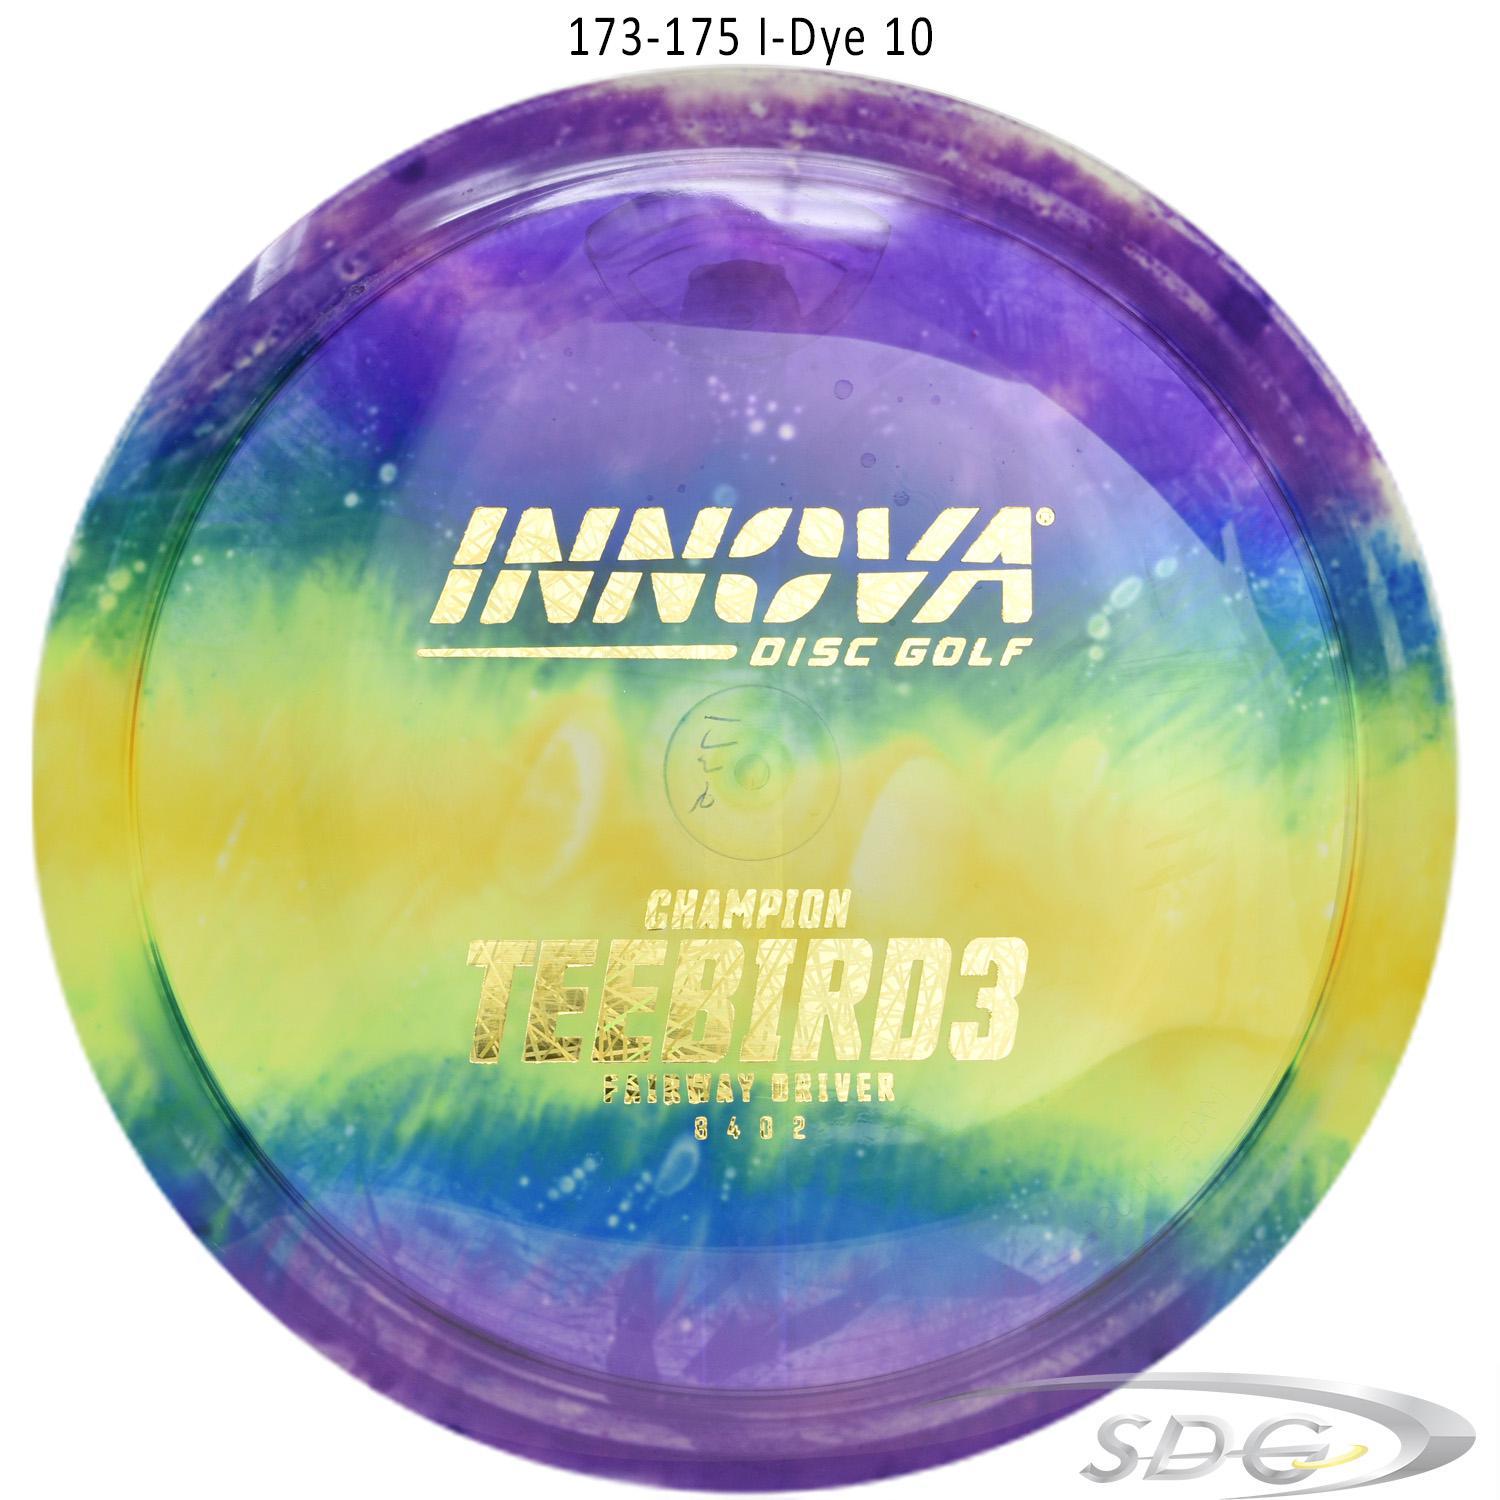 innova-champion-teebird3-i-dye-disc-golf-fairway-driver 173-175 I-Dye 10 